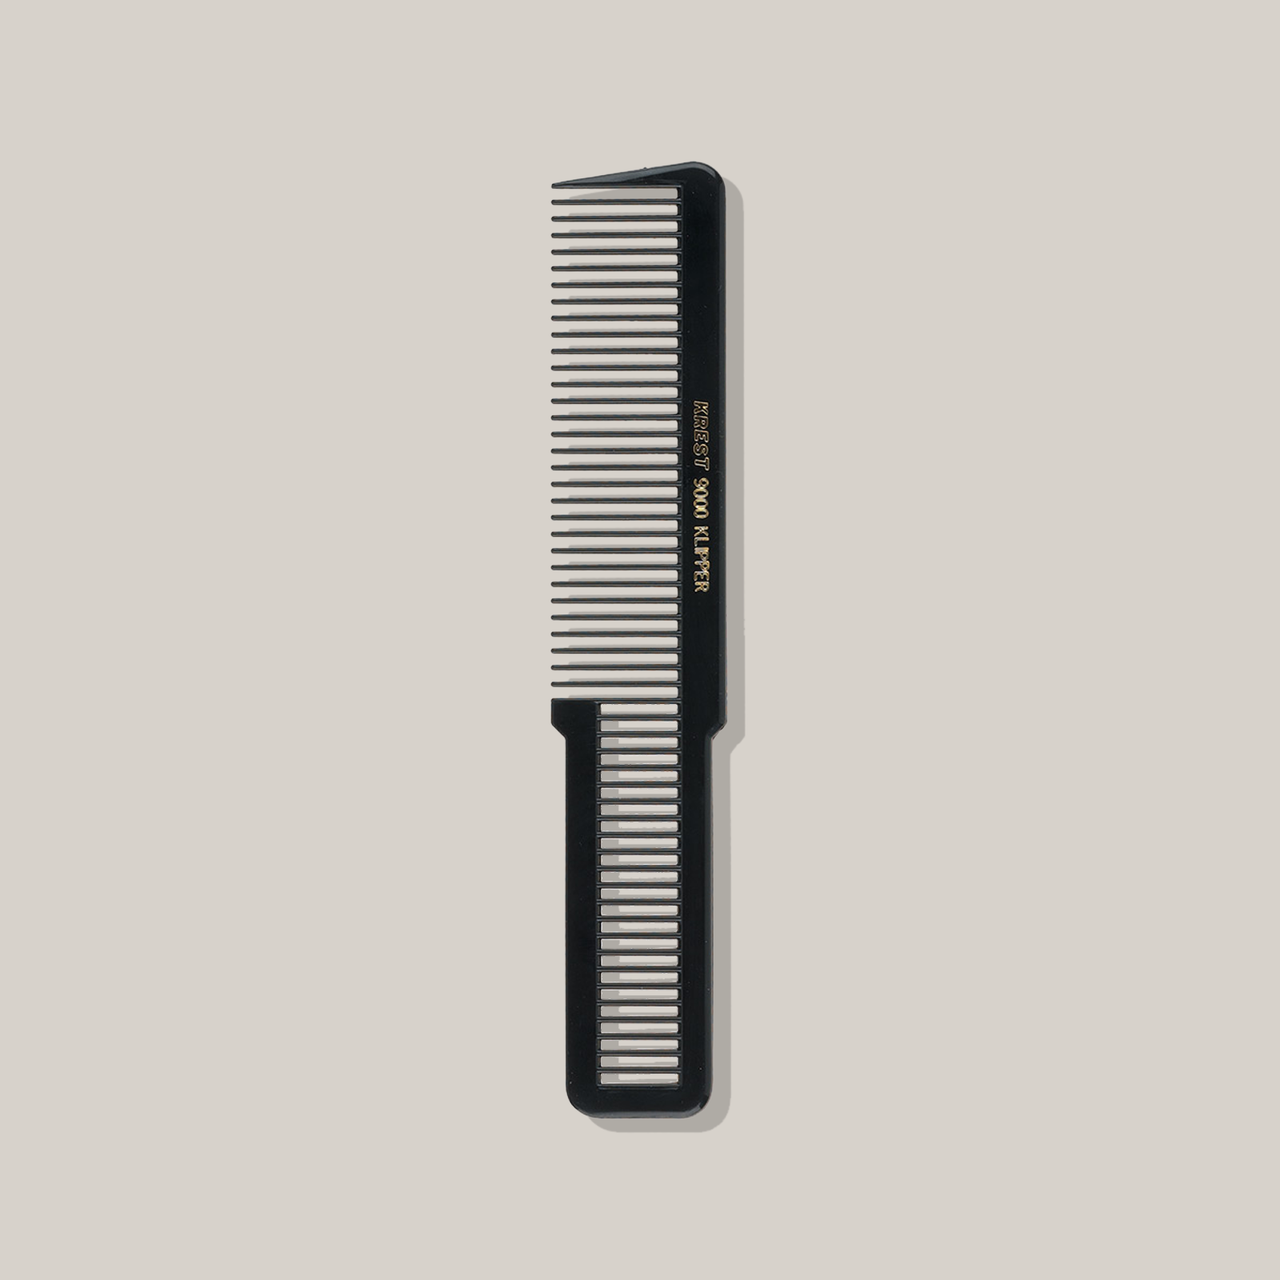 Krest Klipper Comb #9000C 